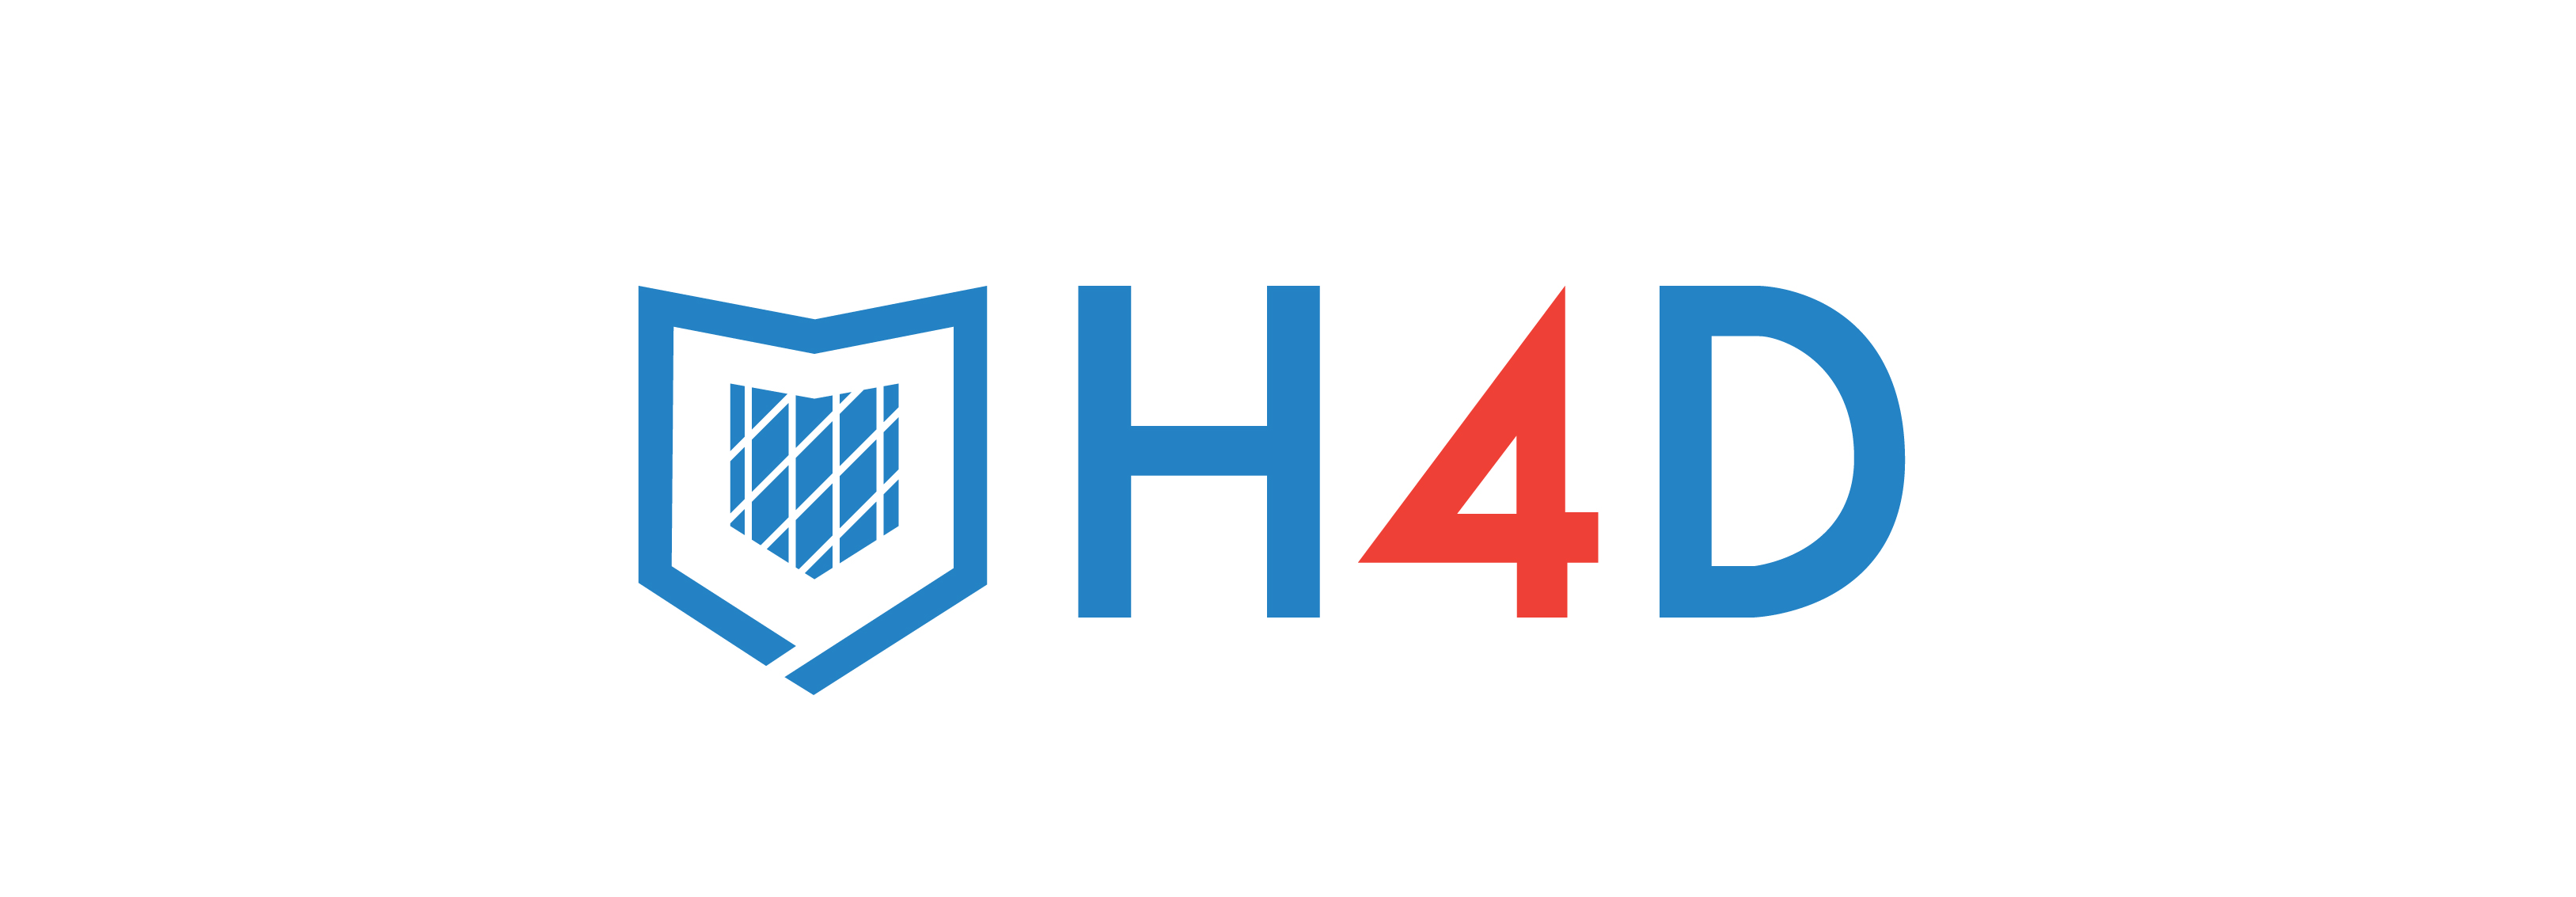 Hacking for Defense logo